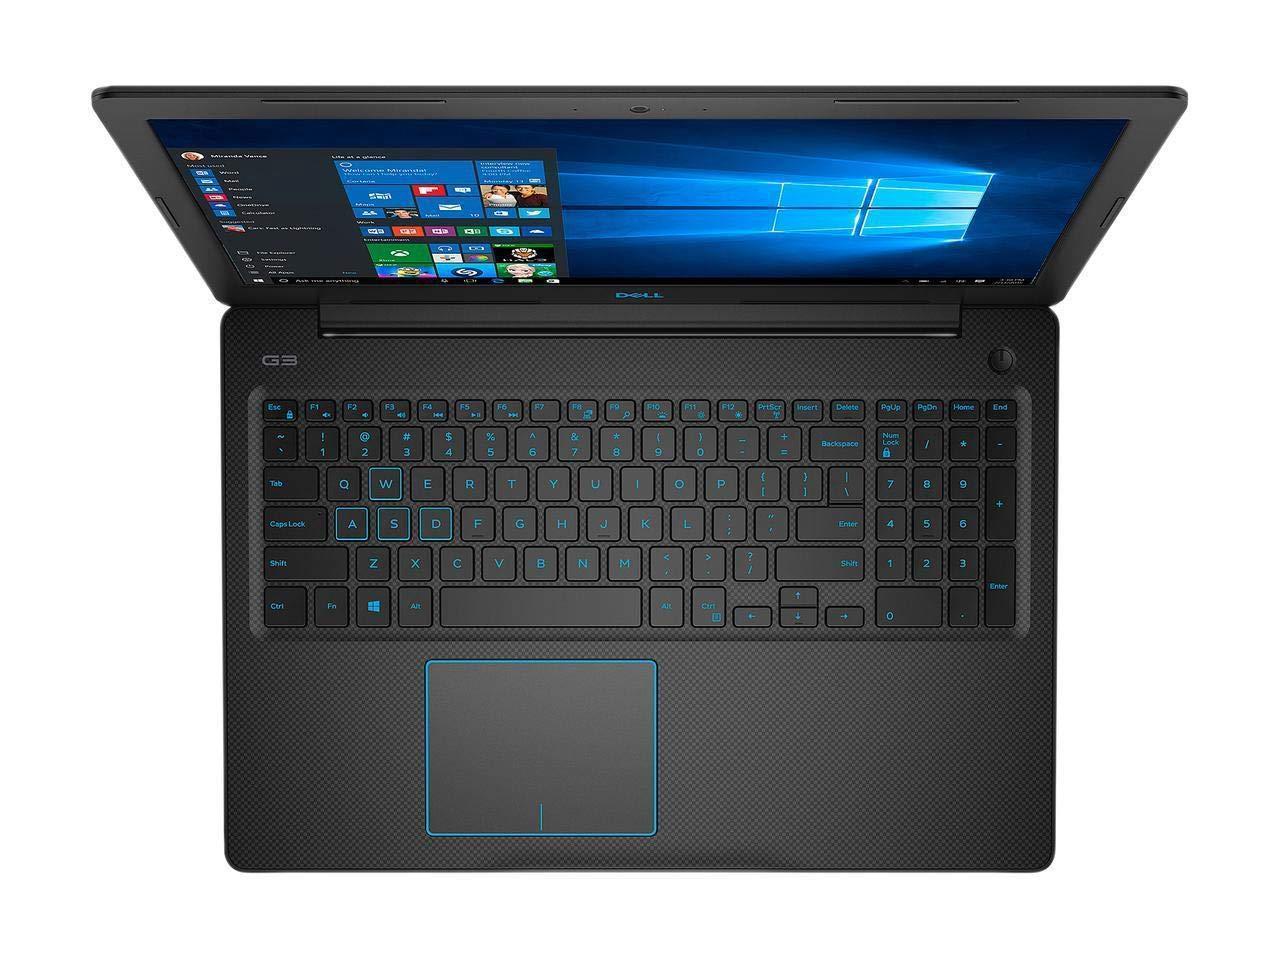 Newest Dell 15.6" FHD IPS High-Performance Gaming Laptop | Intel Core i5-8300H Quad-Core| 16GB DDR4 RAM |256G Solid State Drive |NVIDIA GeForce GTX 1050Ti 4GB |Backlit Keyboard | MaxxAudio|Windows 10